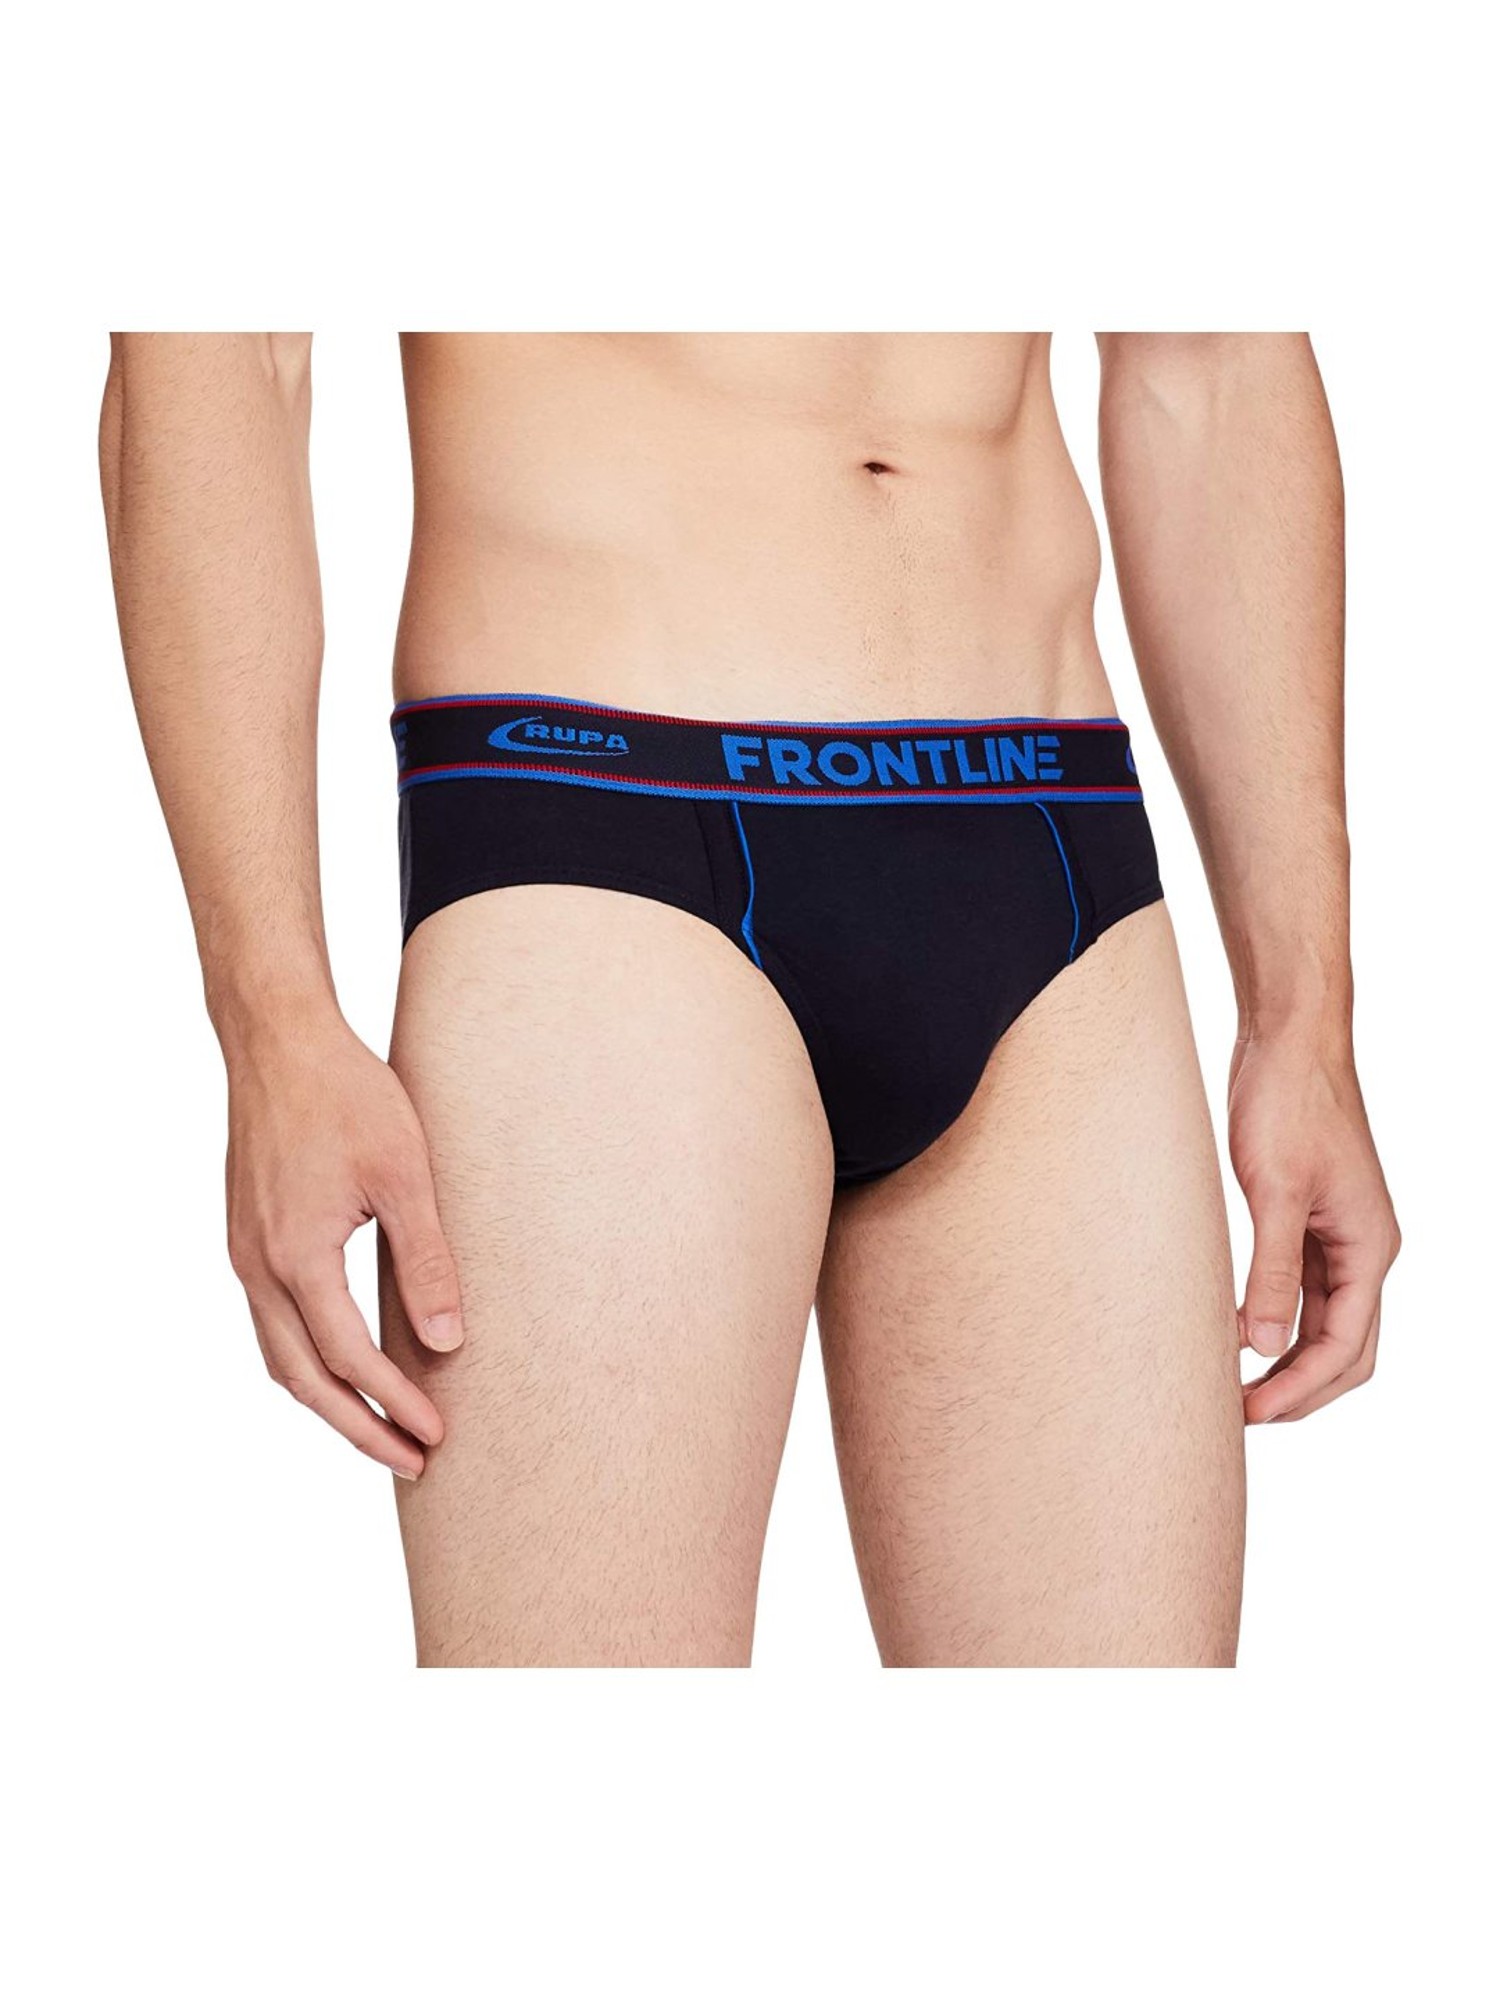 Buy RUPA Frontline Men Underwear Set of 5 (95) at